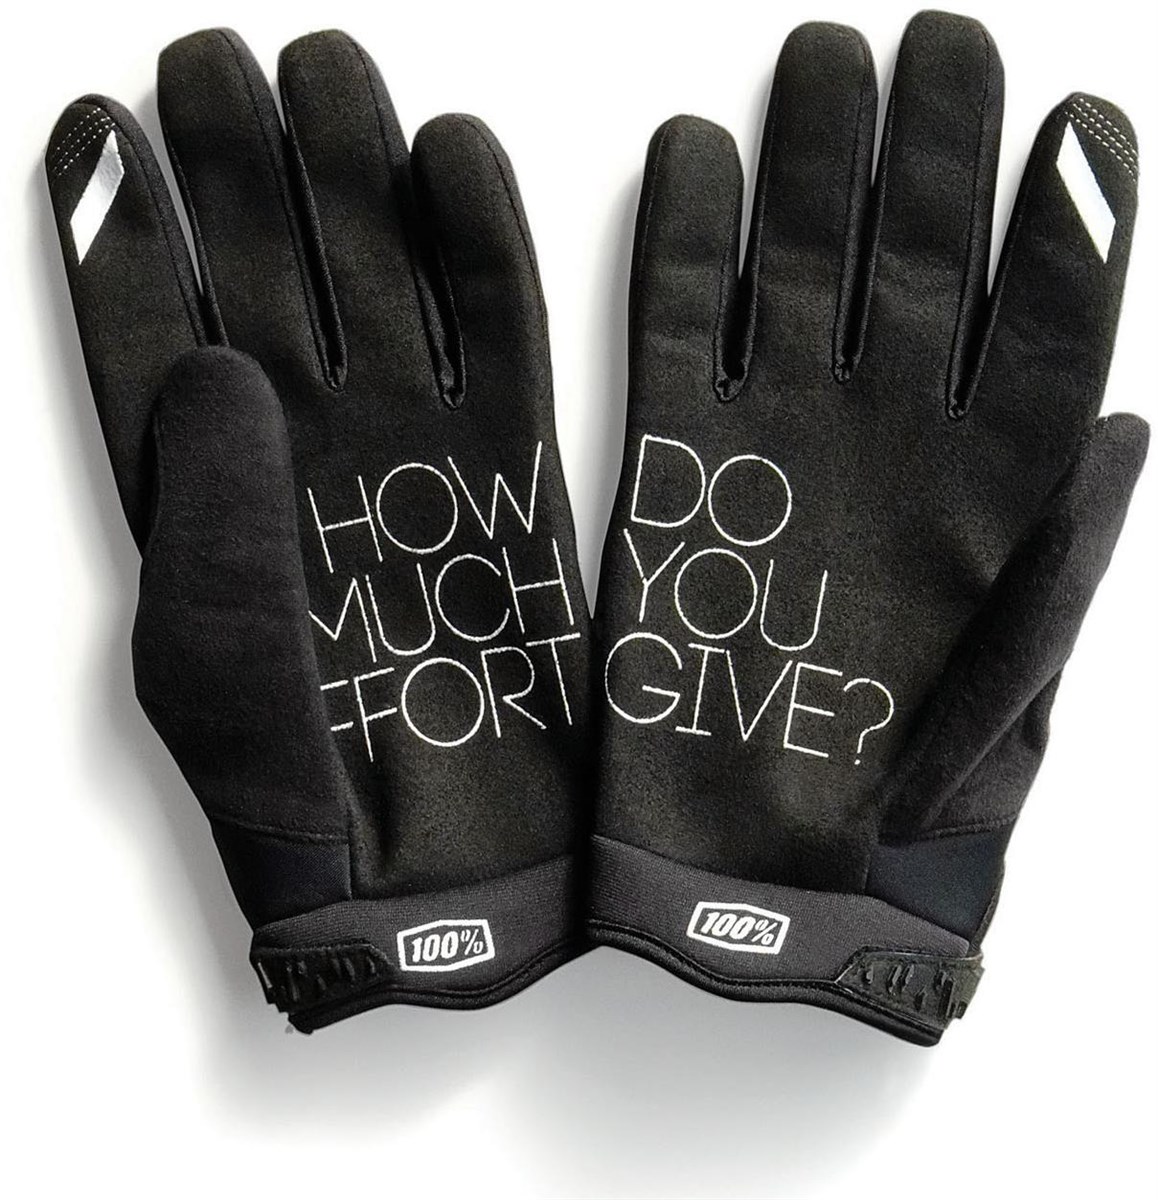 100% Brisker Cold Weather Long Finger MTB Cycling Gloves